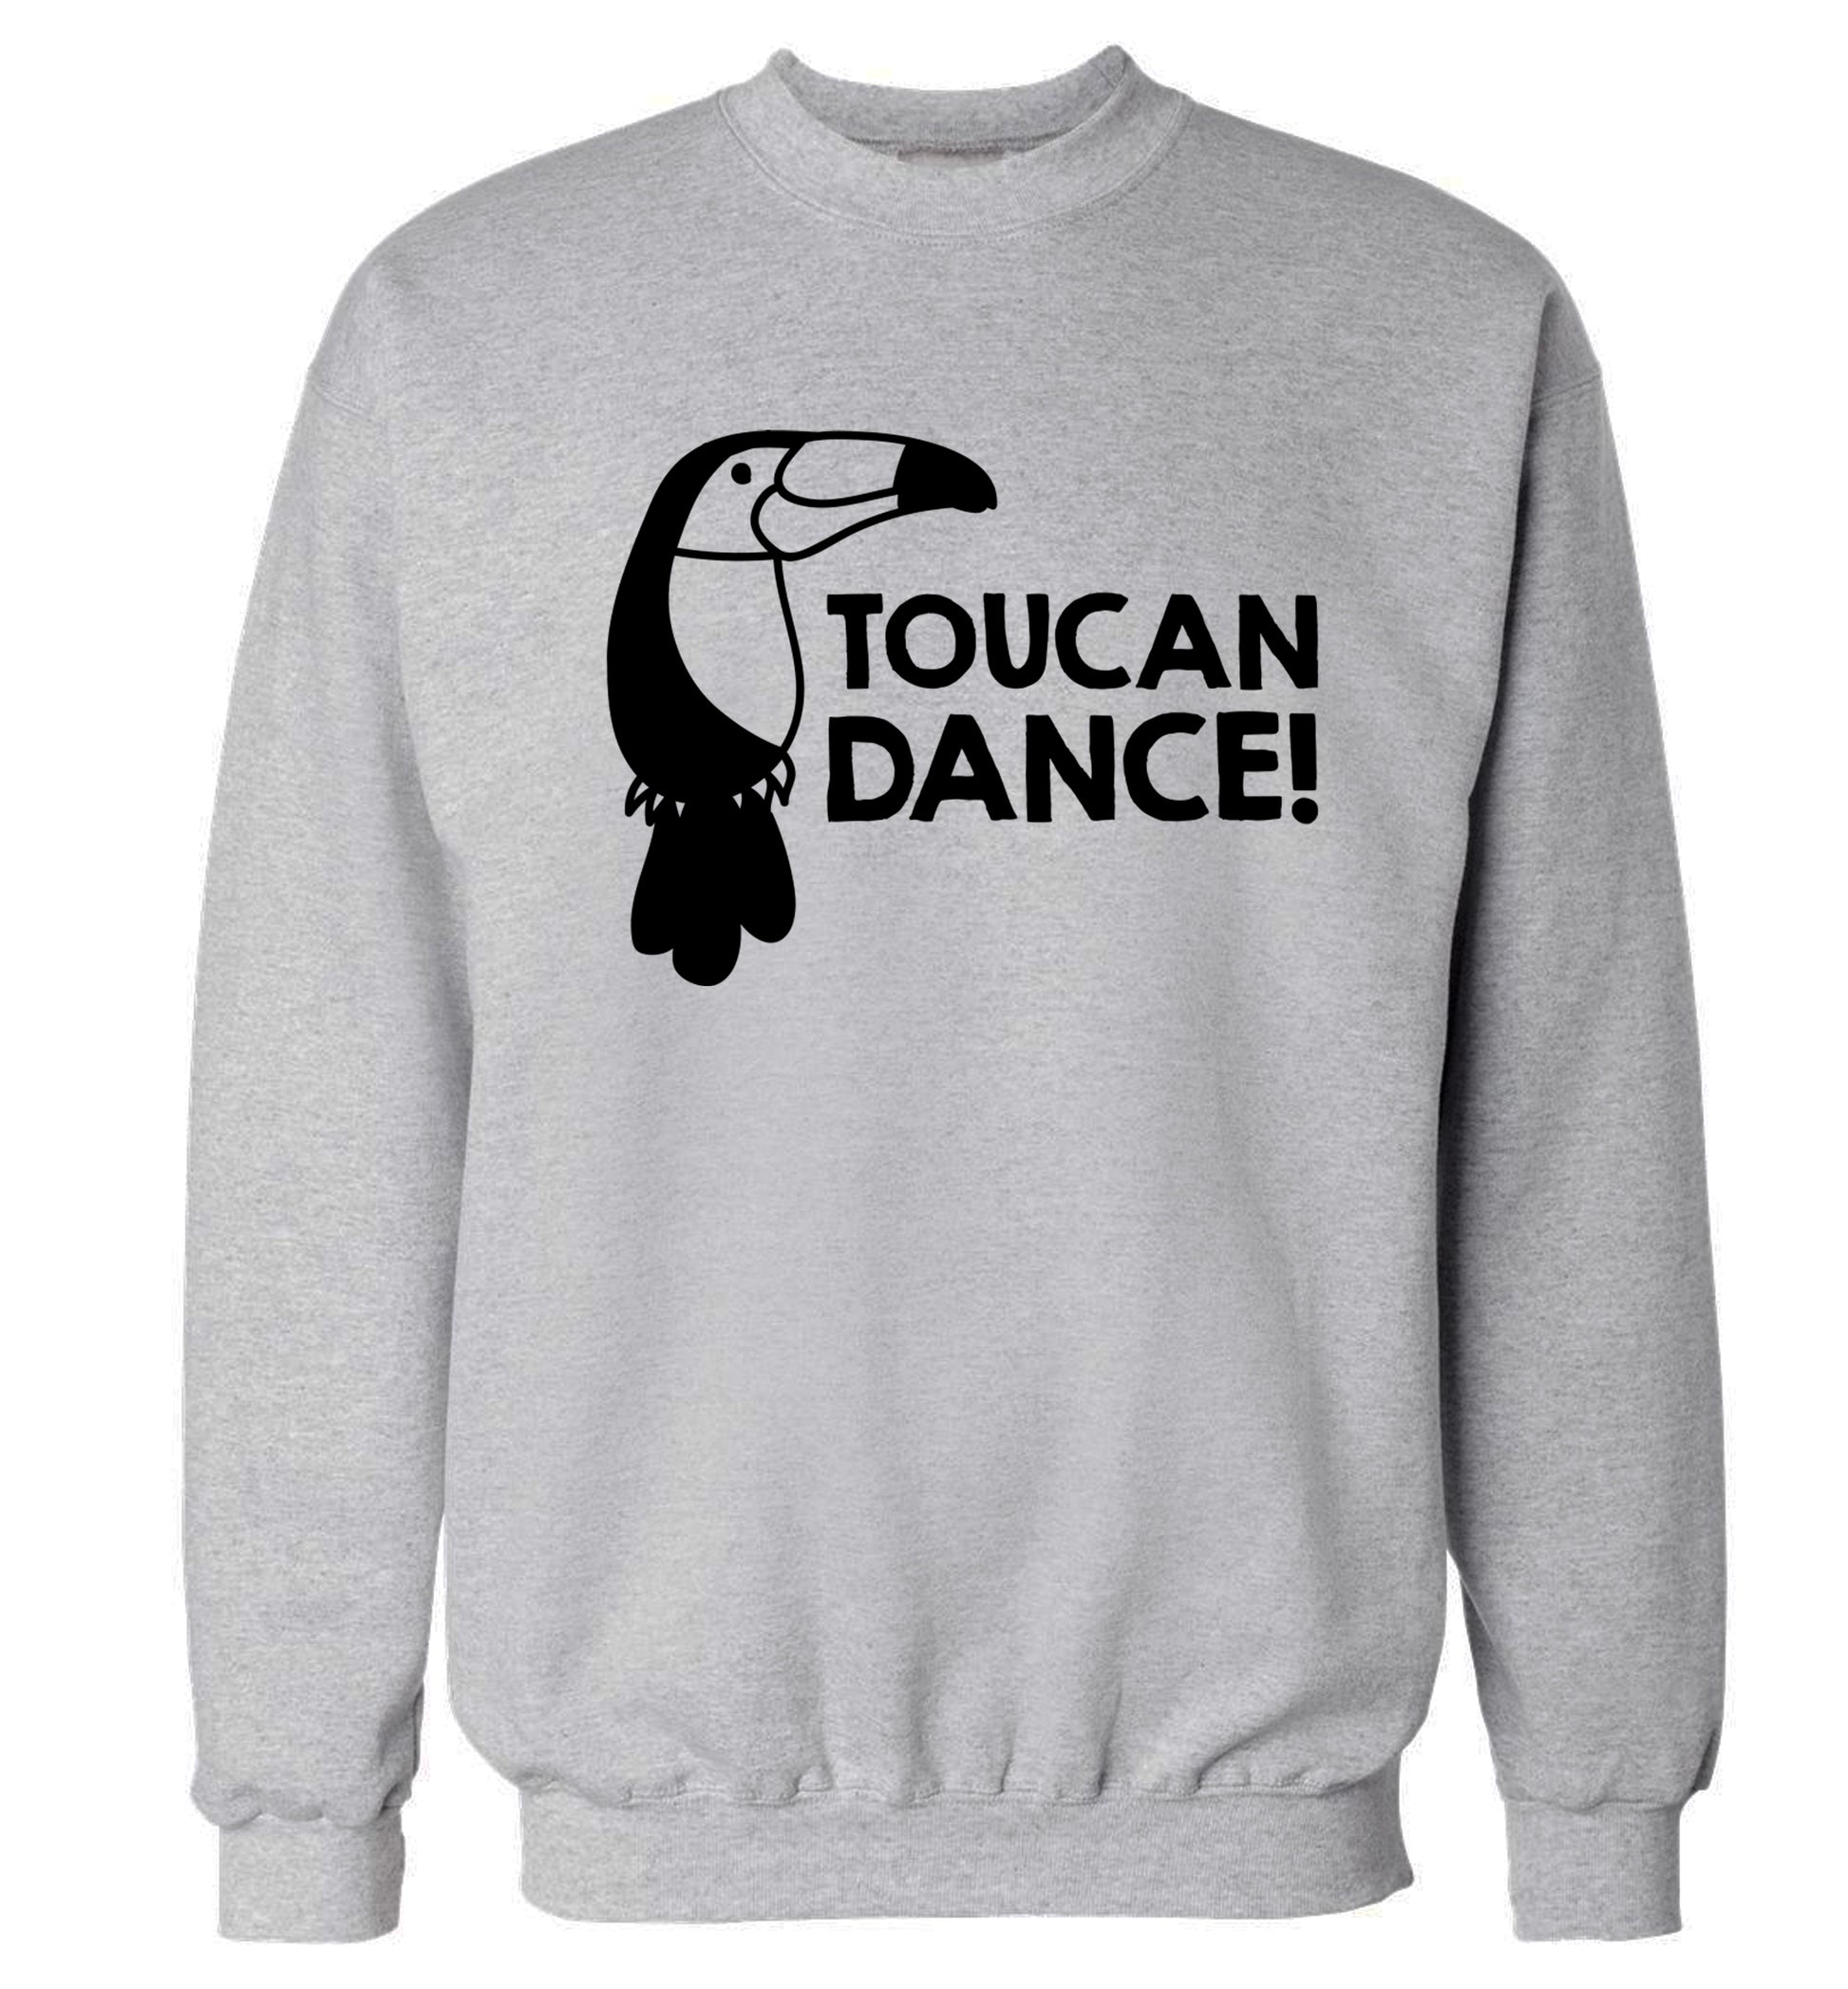 Toucan dance Adult's unisex grey Sweater 2XL